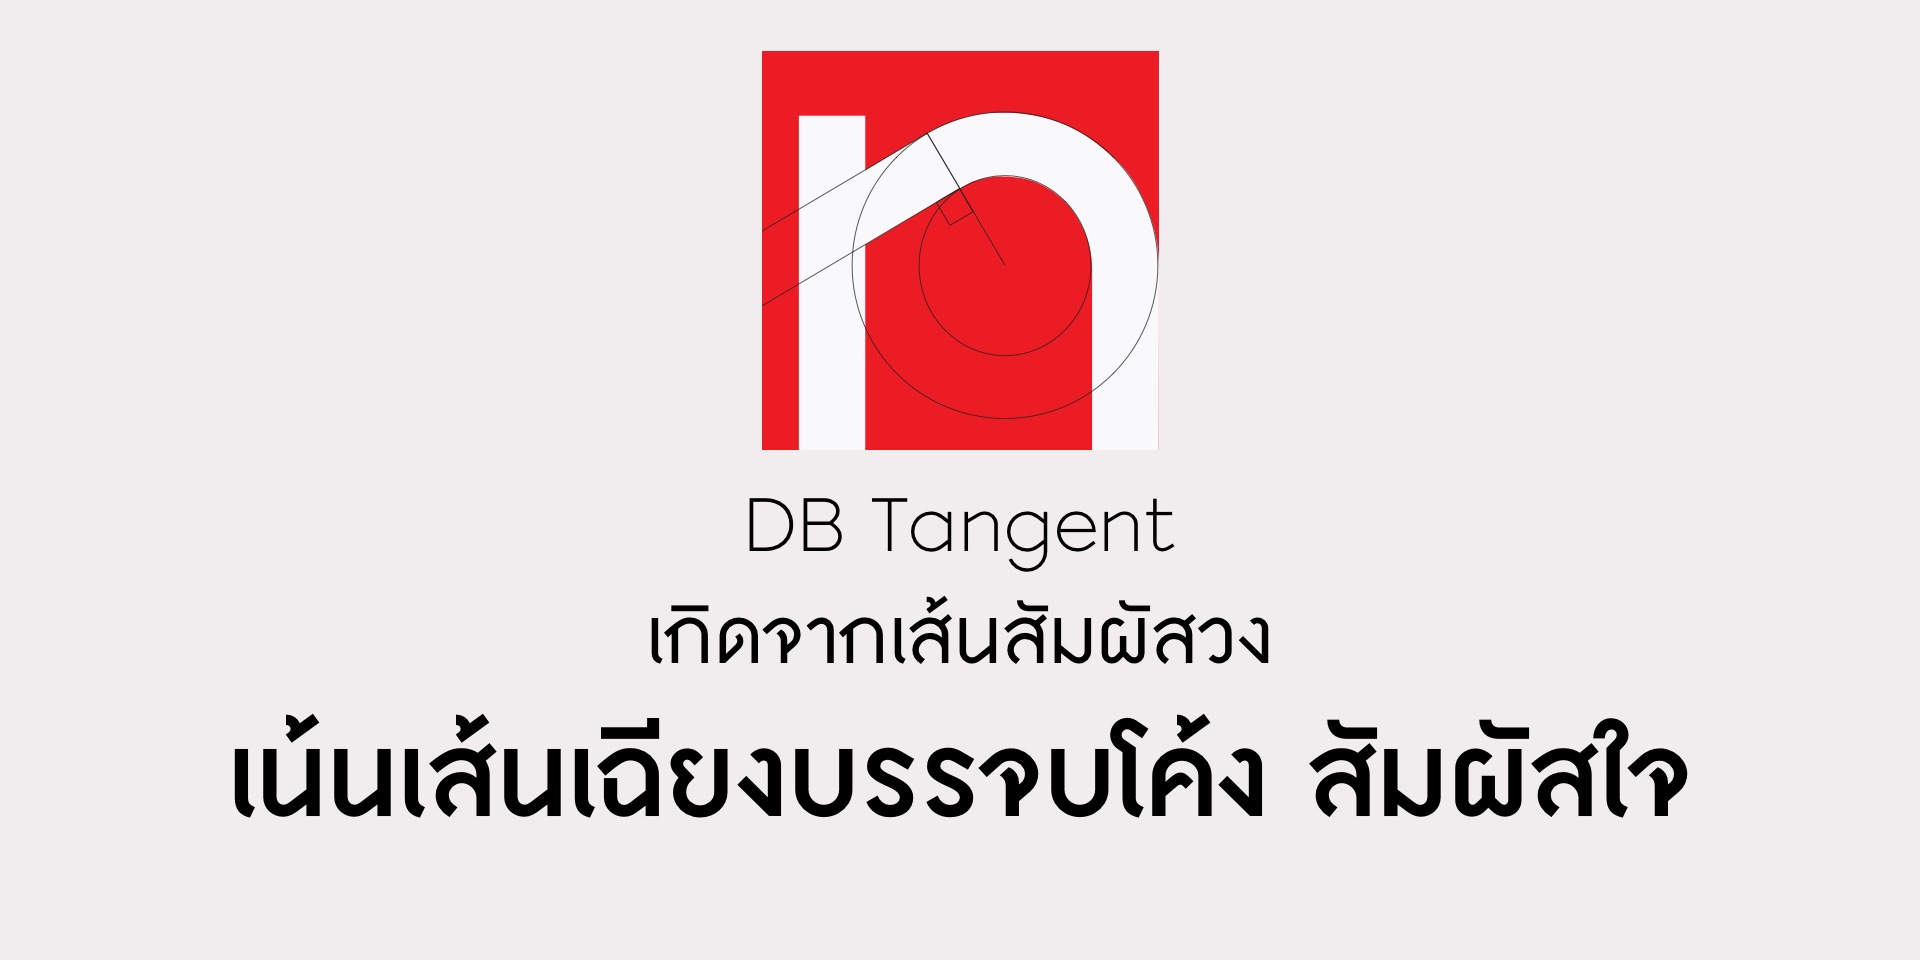 DB Tangent